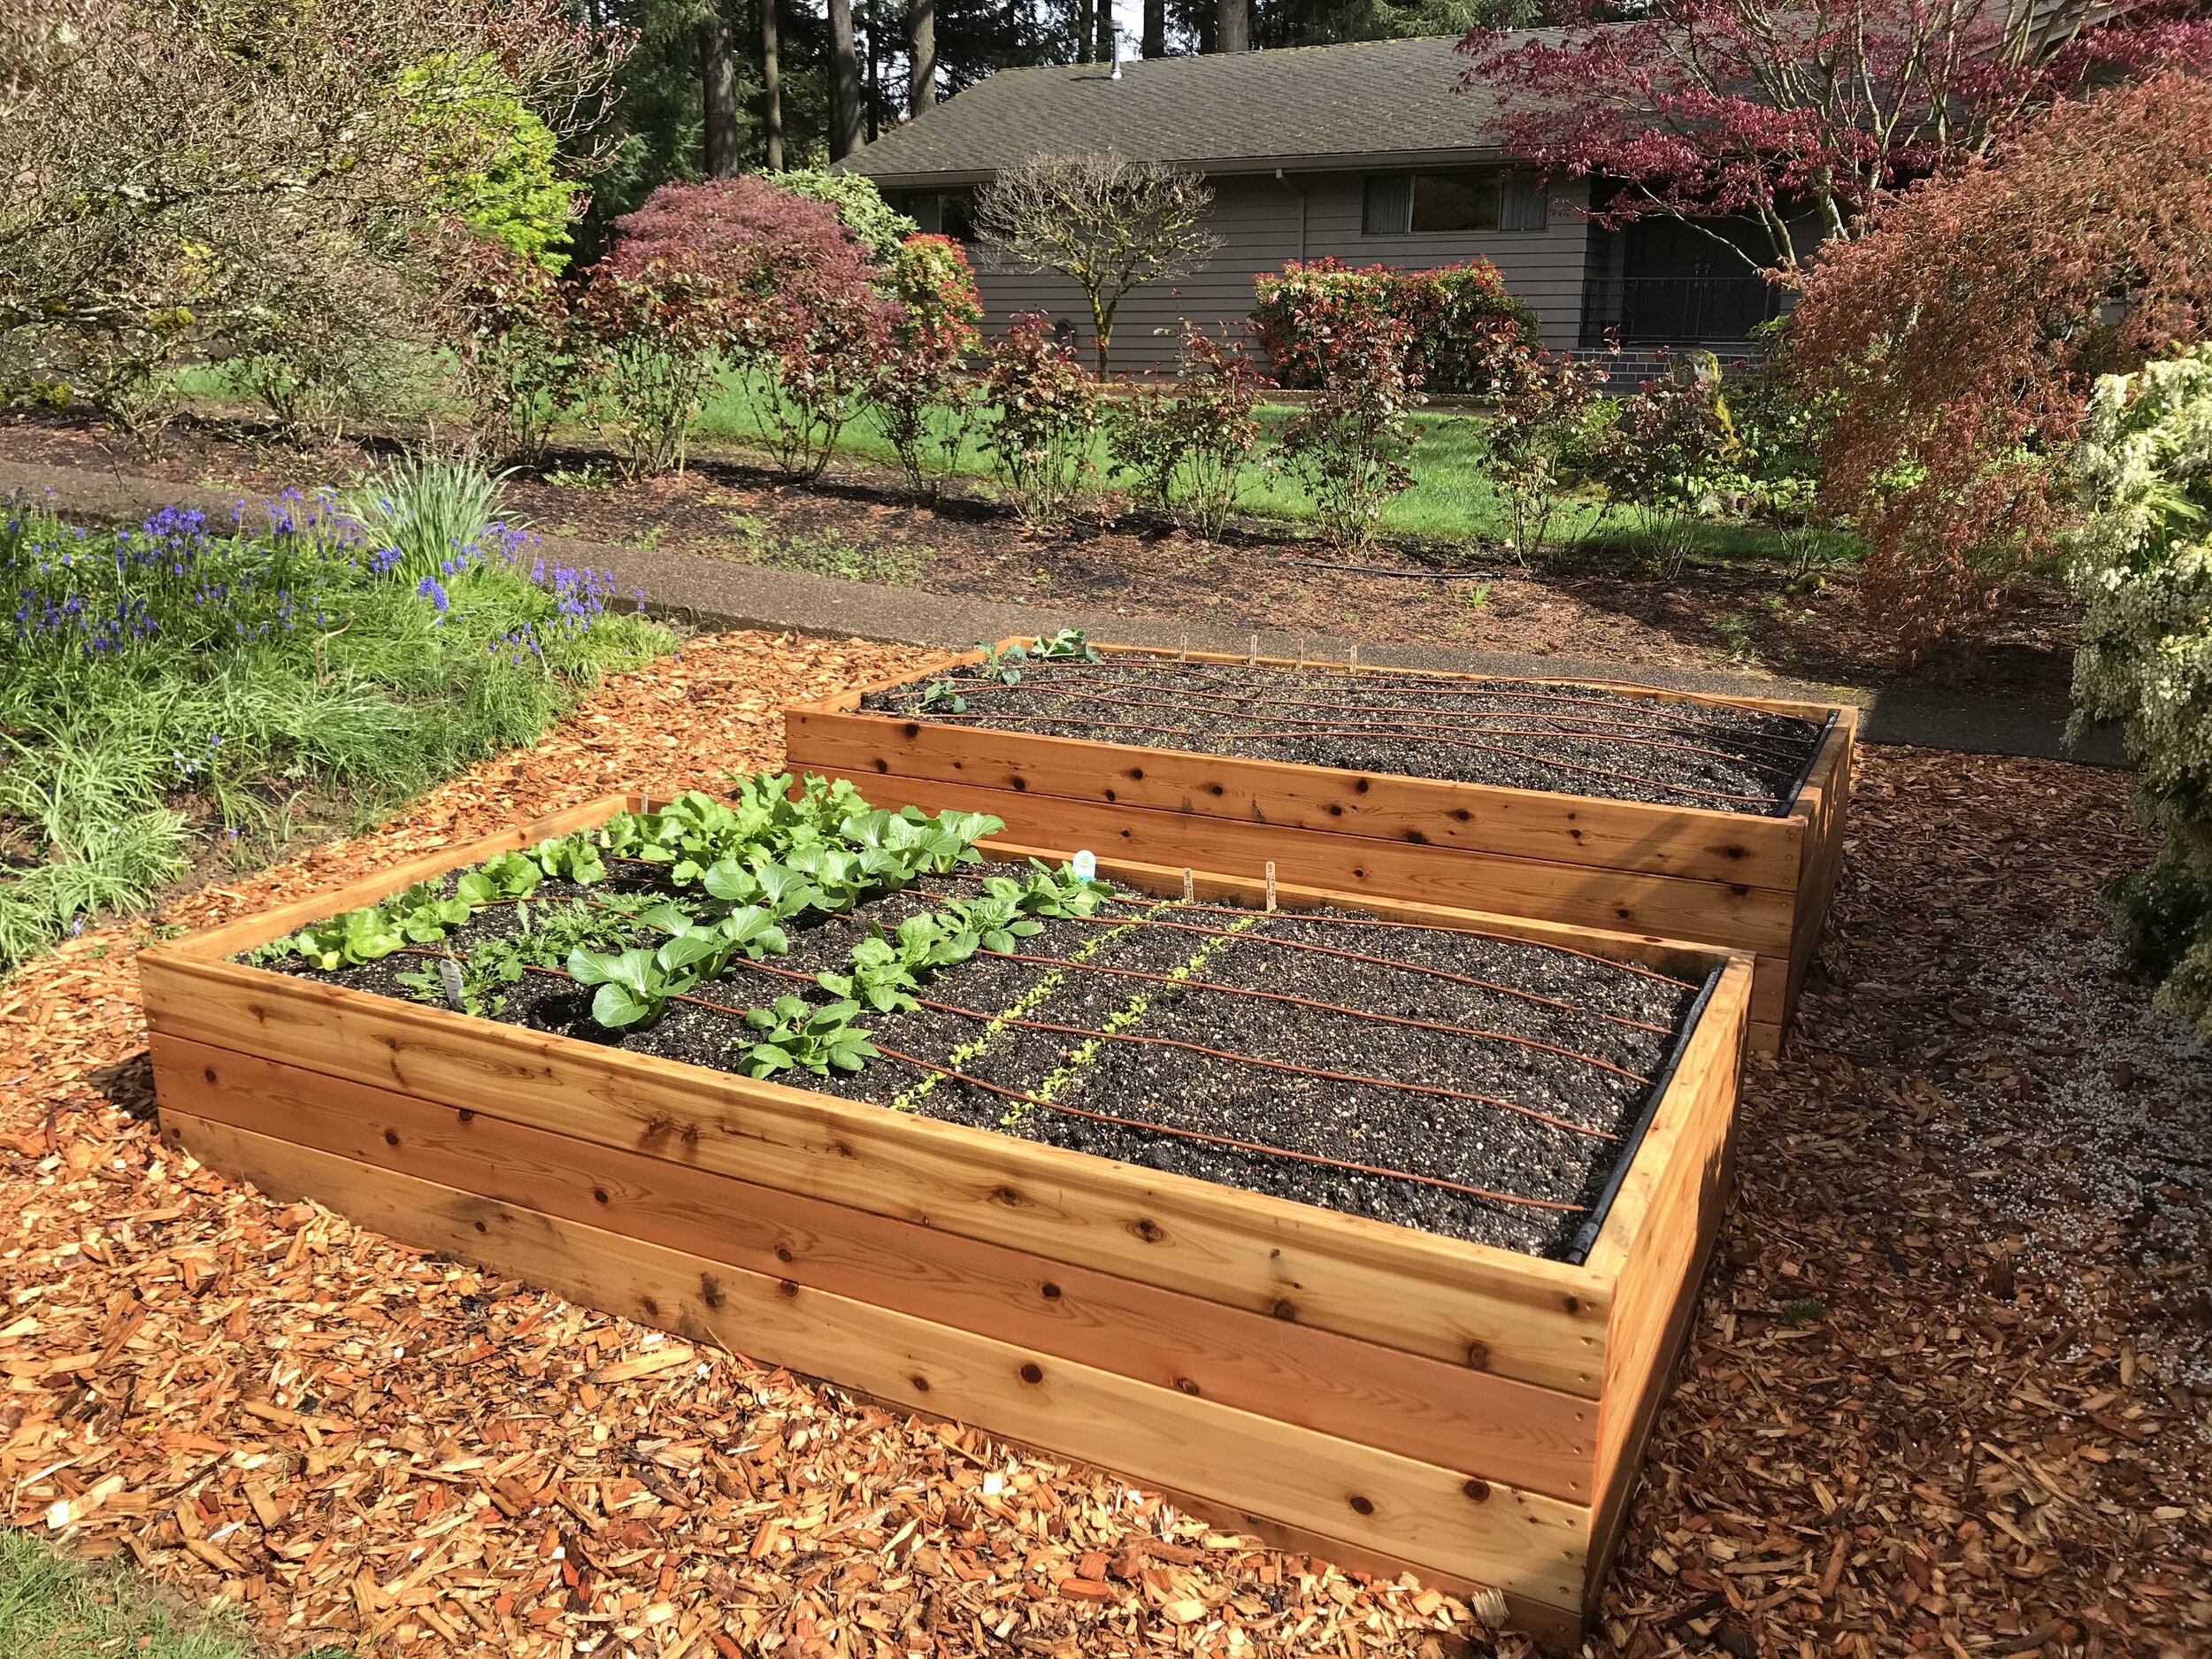  vegetable garden design raised beds